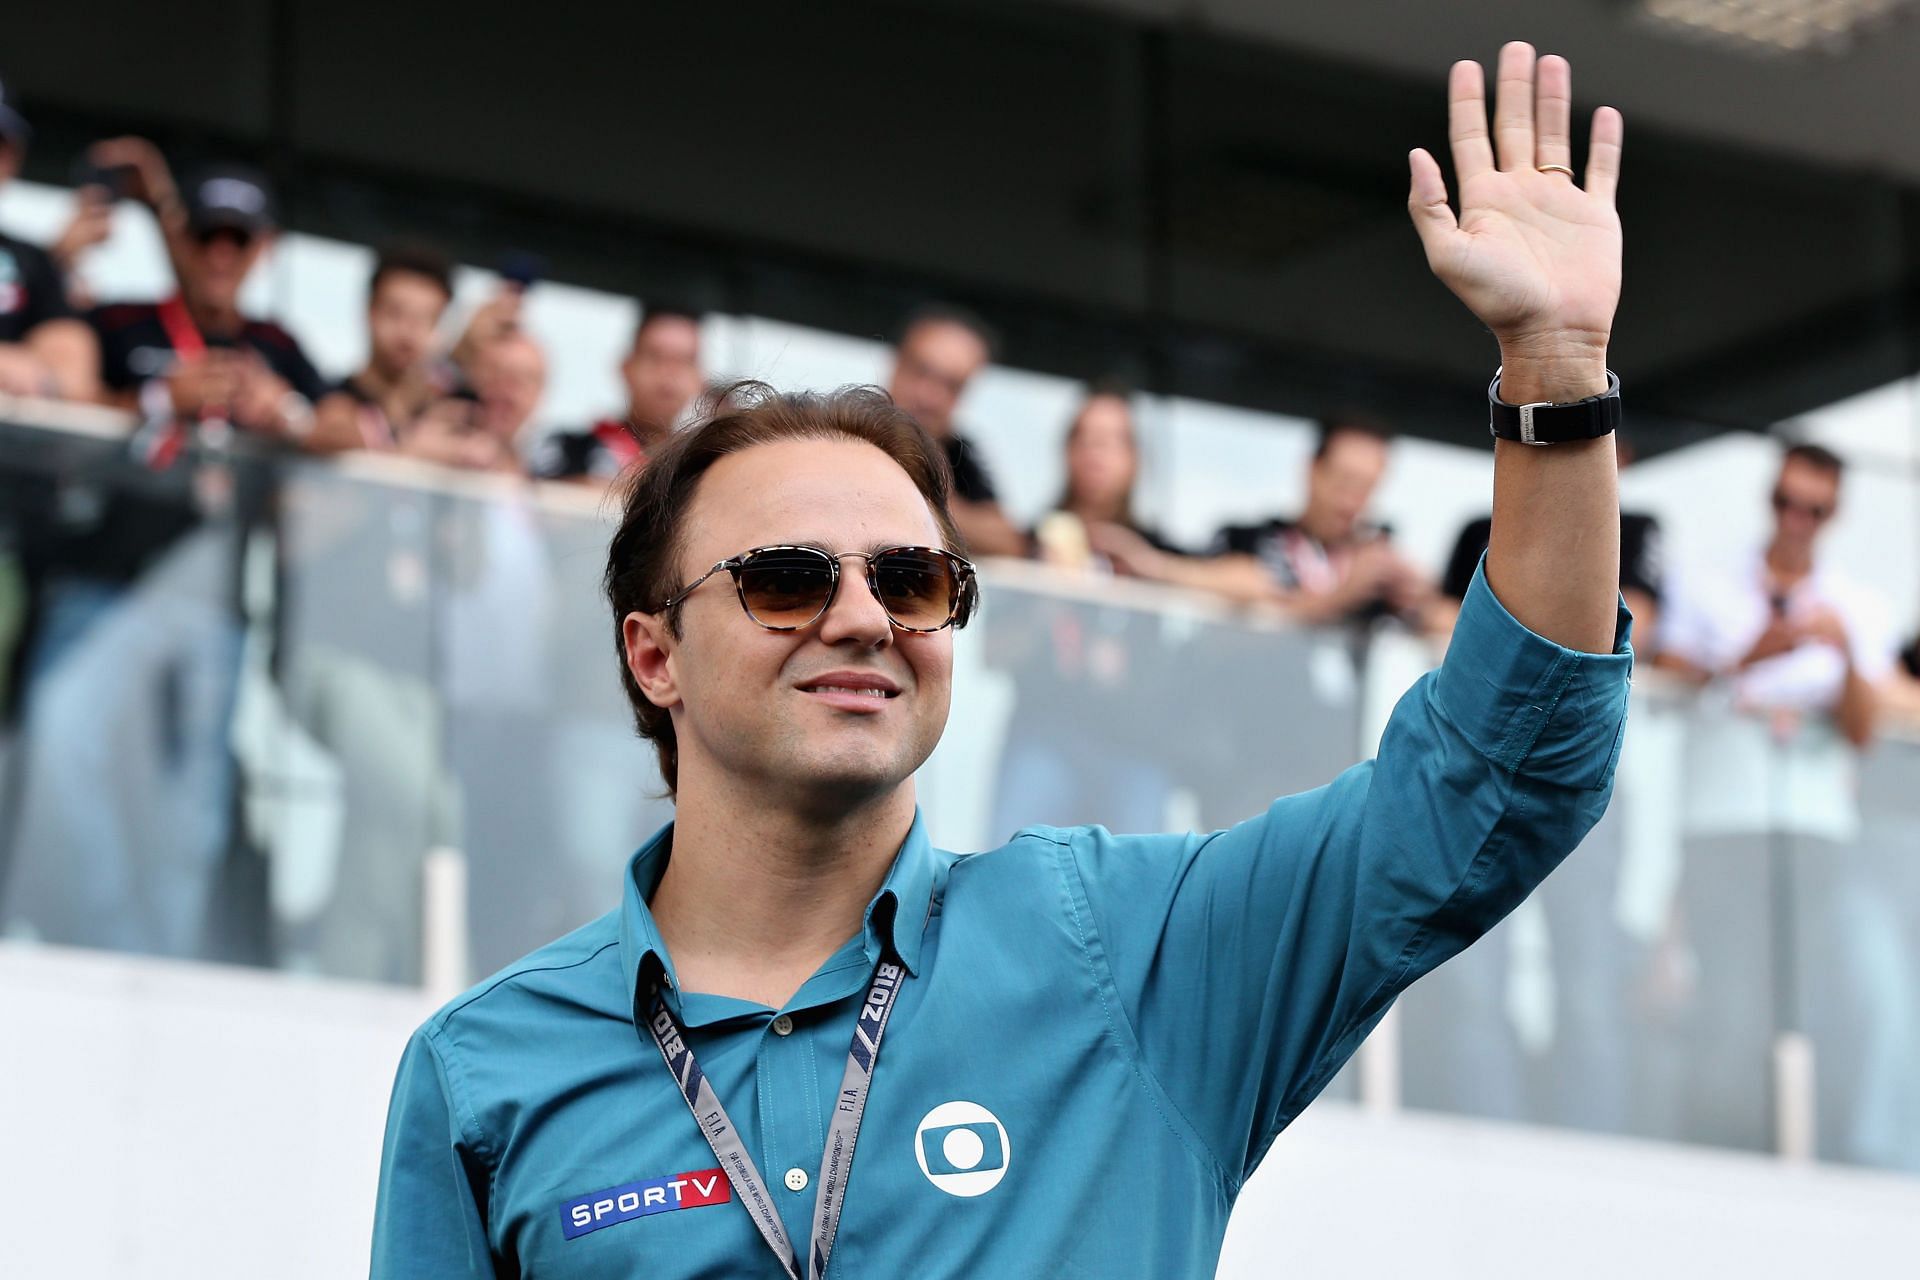 Felipe Massa at the F1 Grand Prix of Brazil